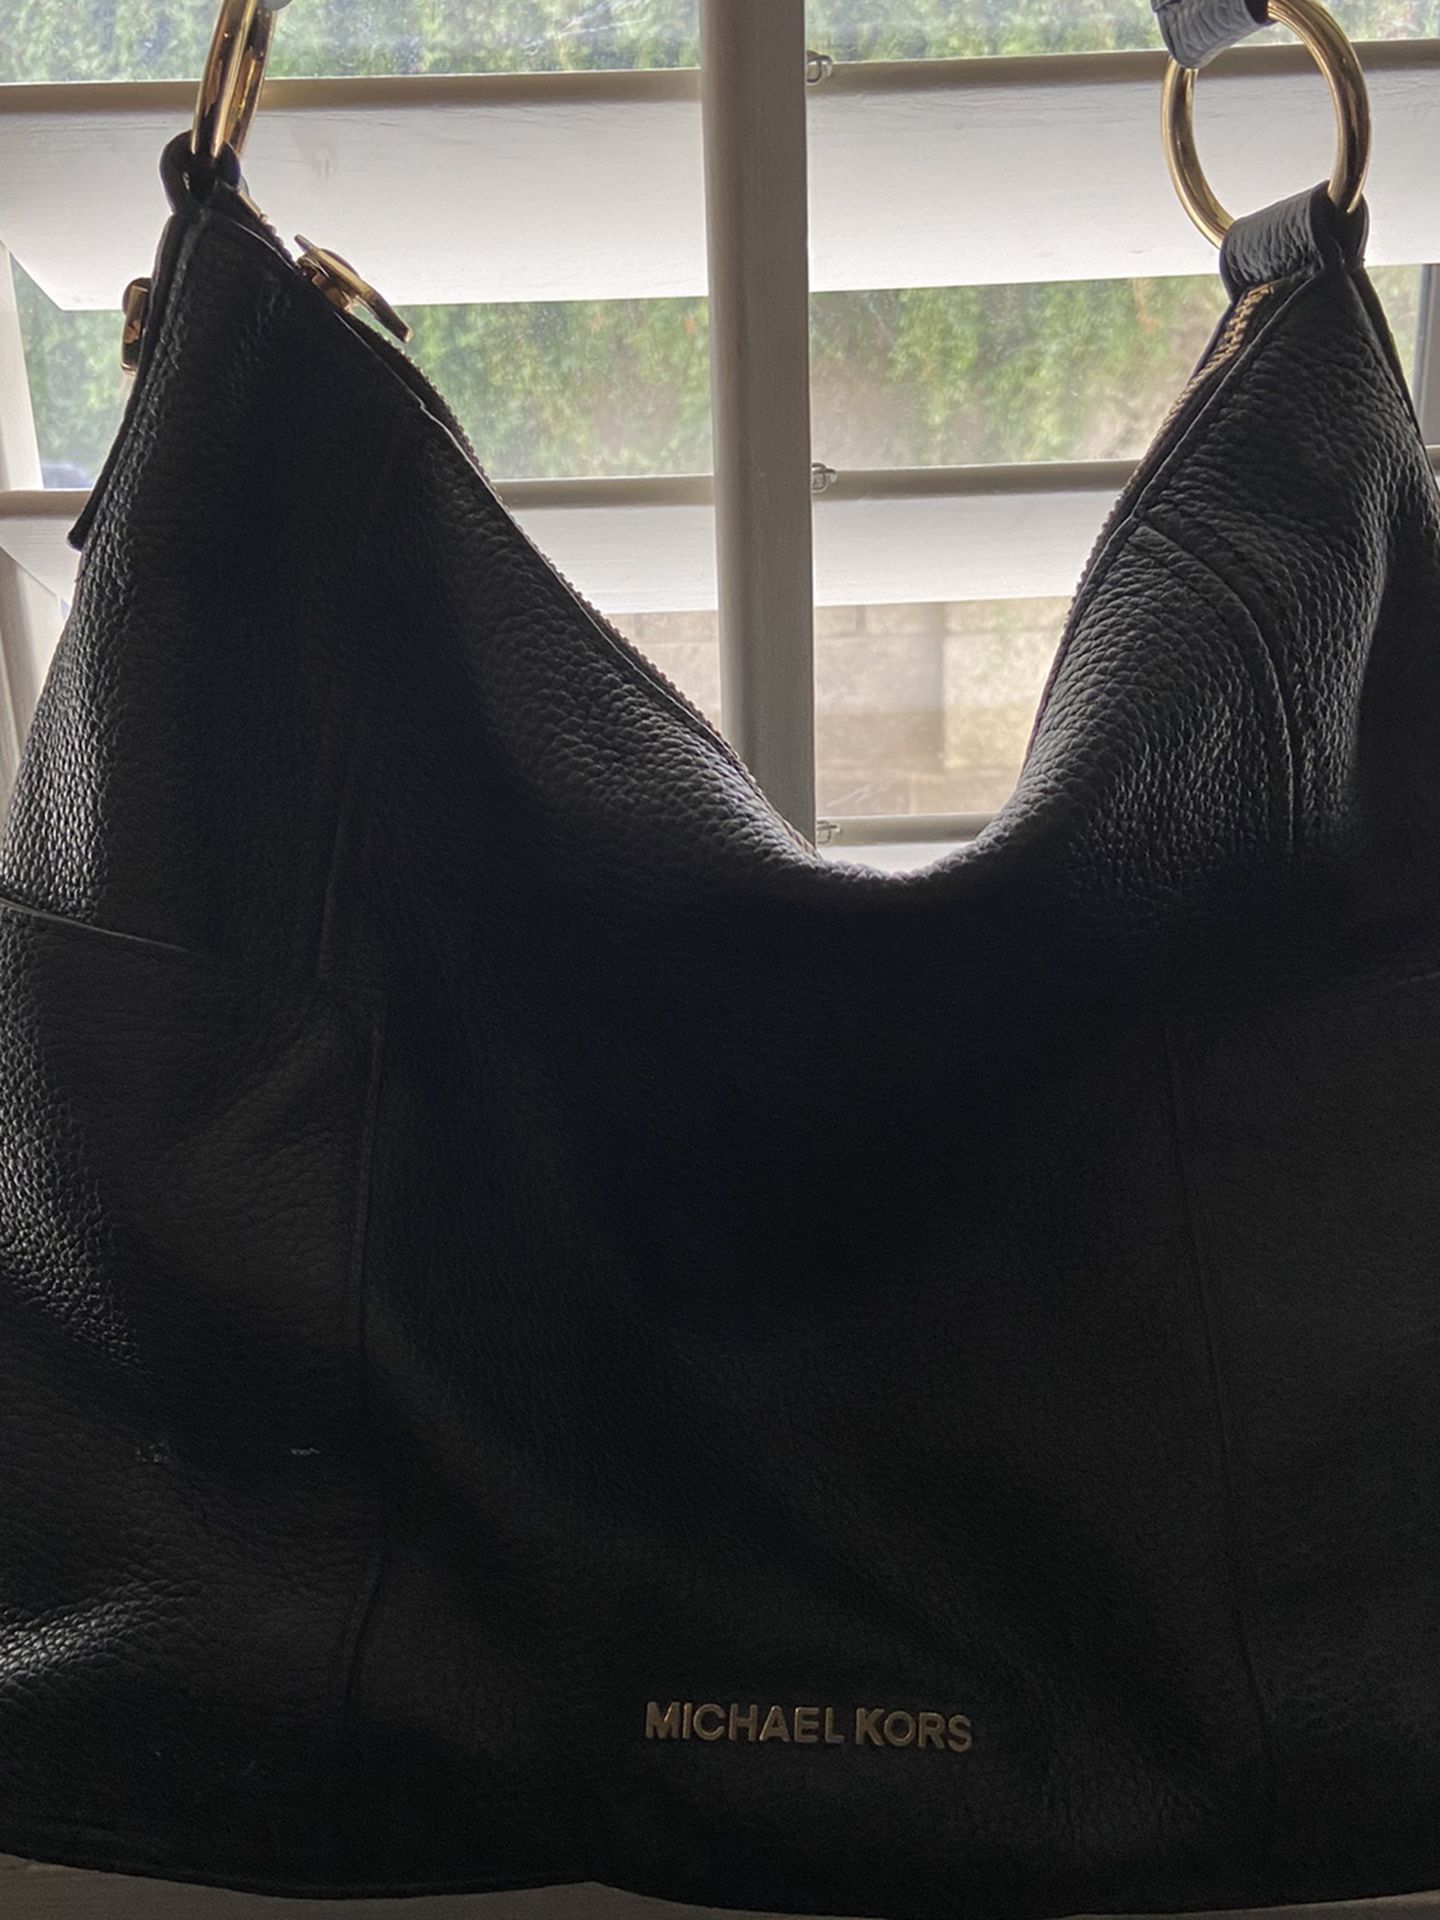 Black Leather Michael Kors Bag